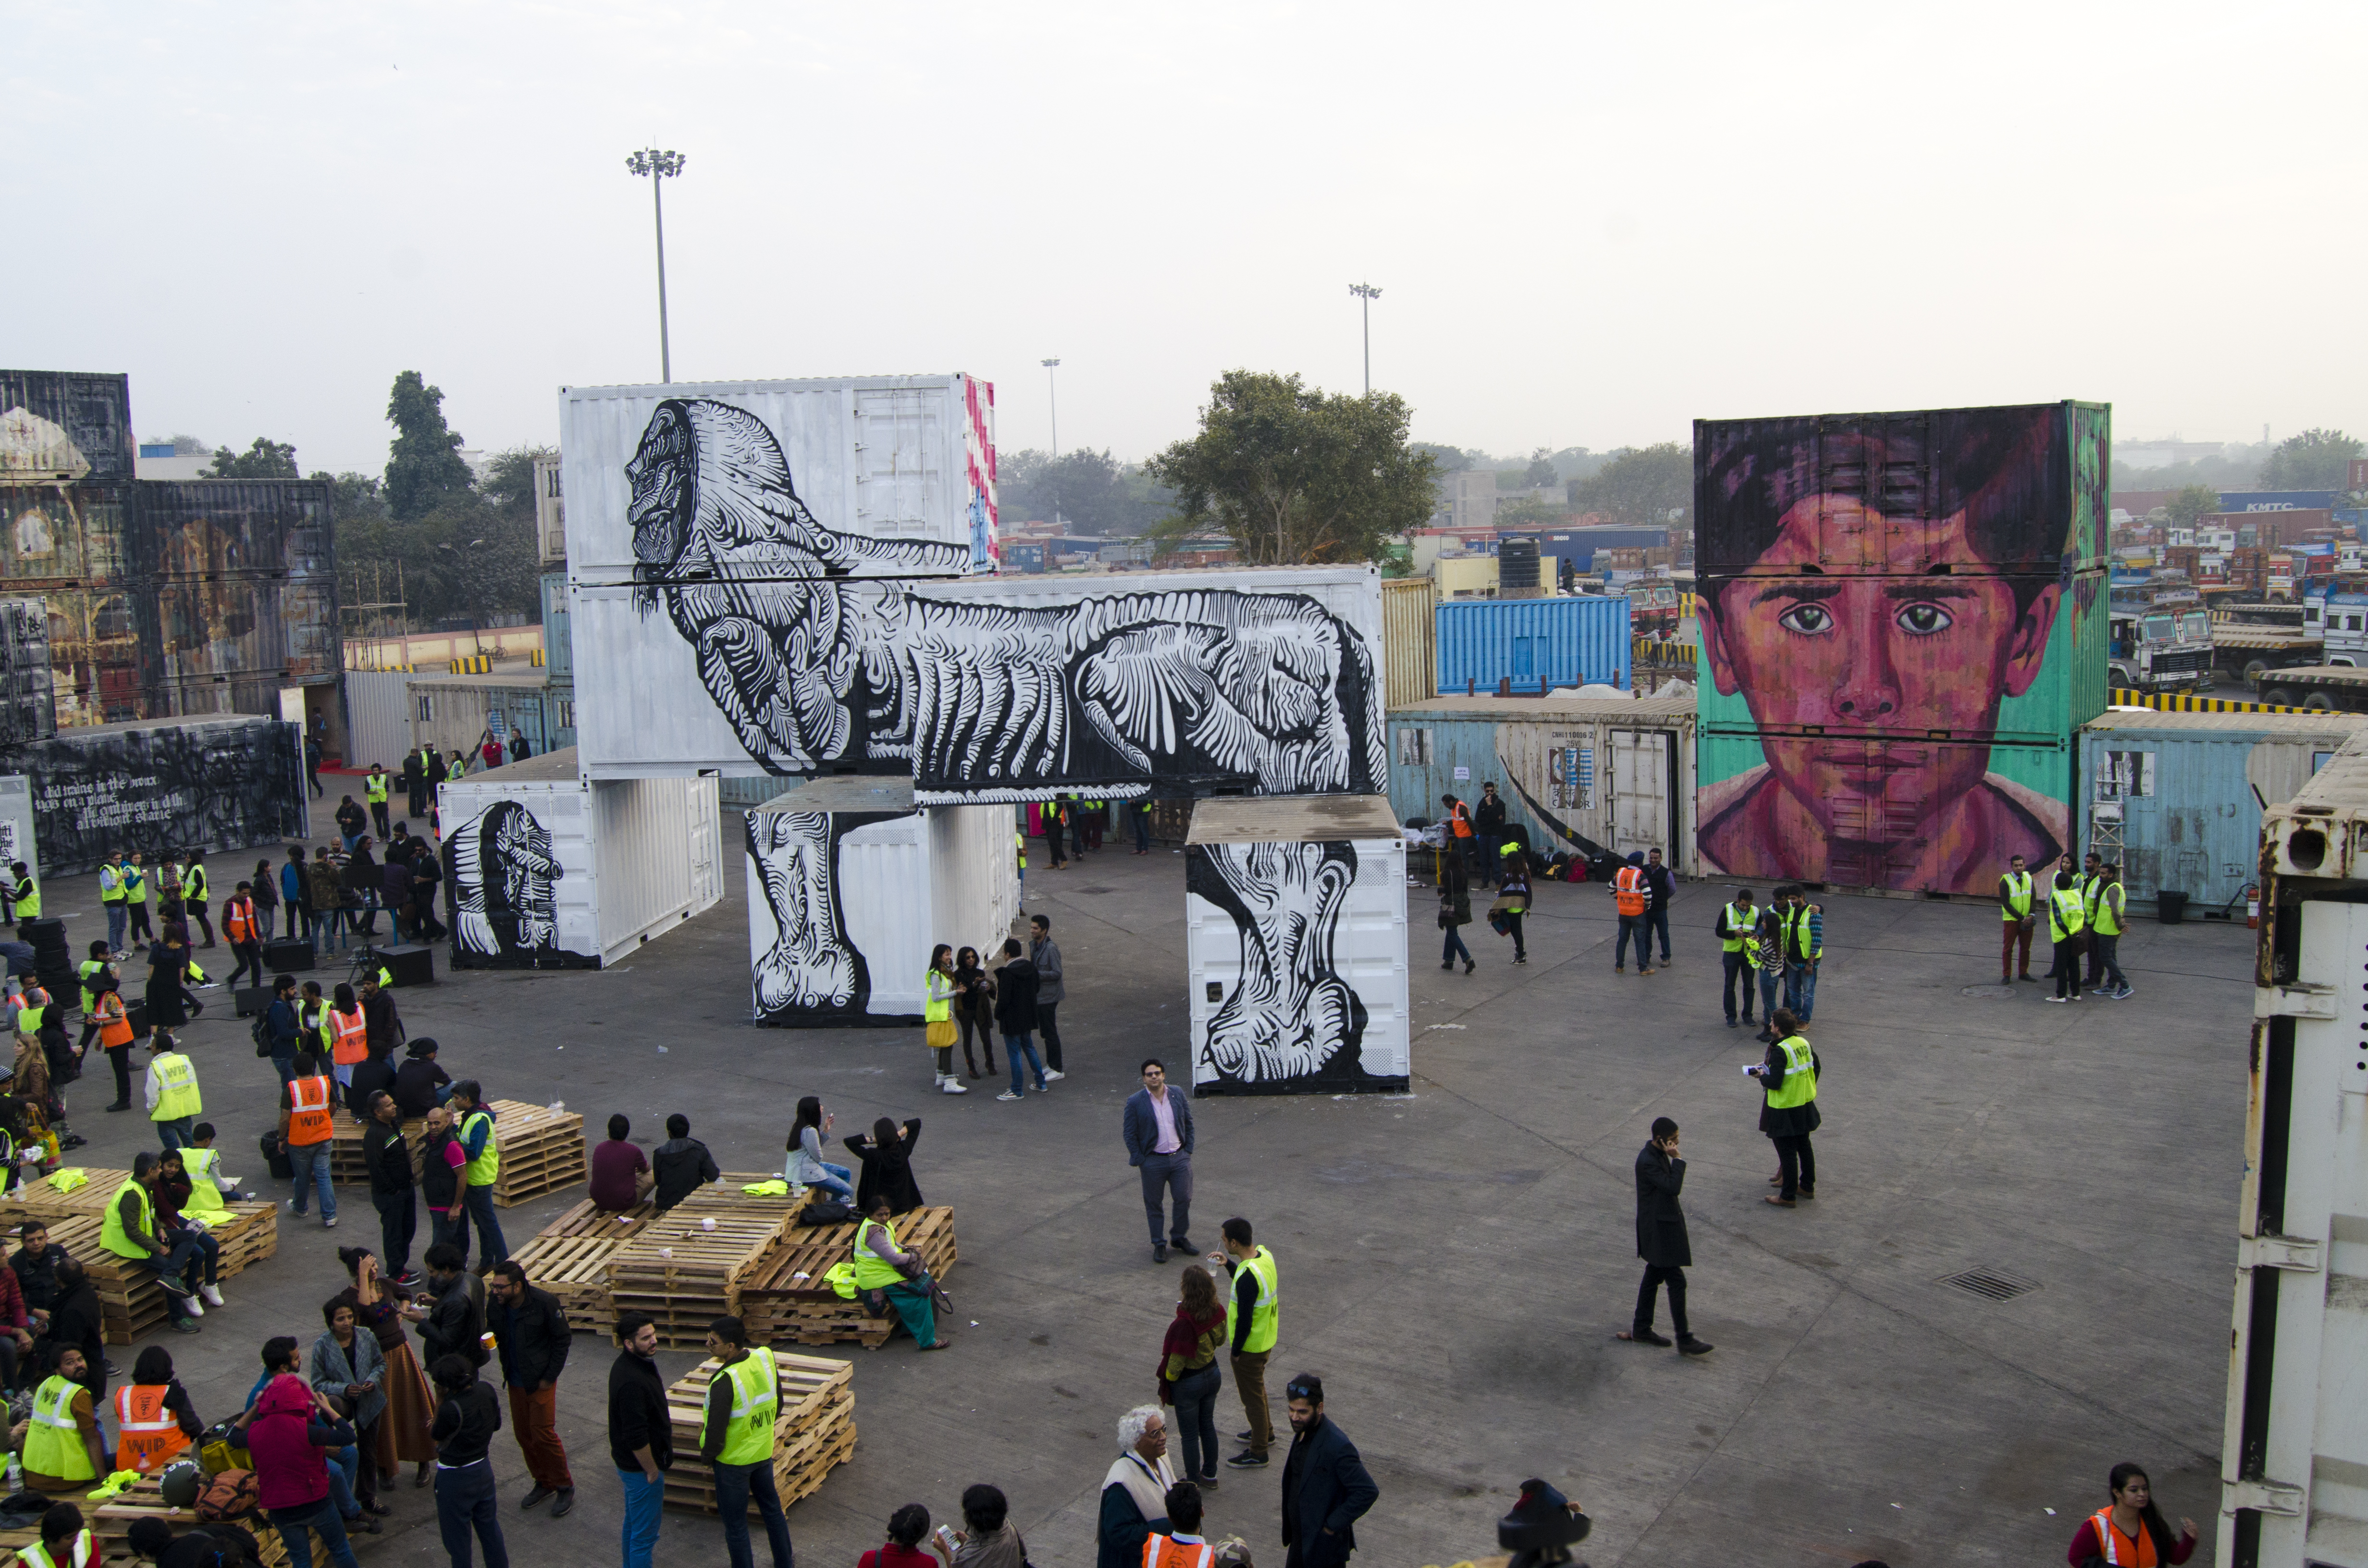 #WIP: The Street Art Show